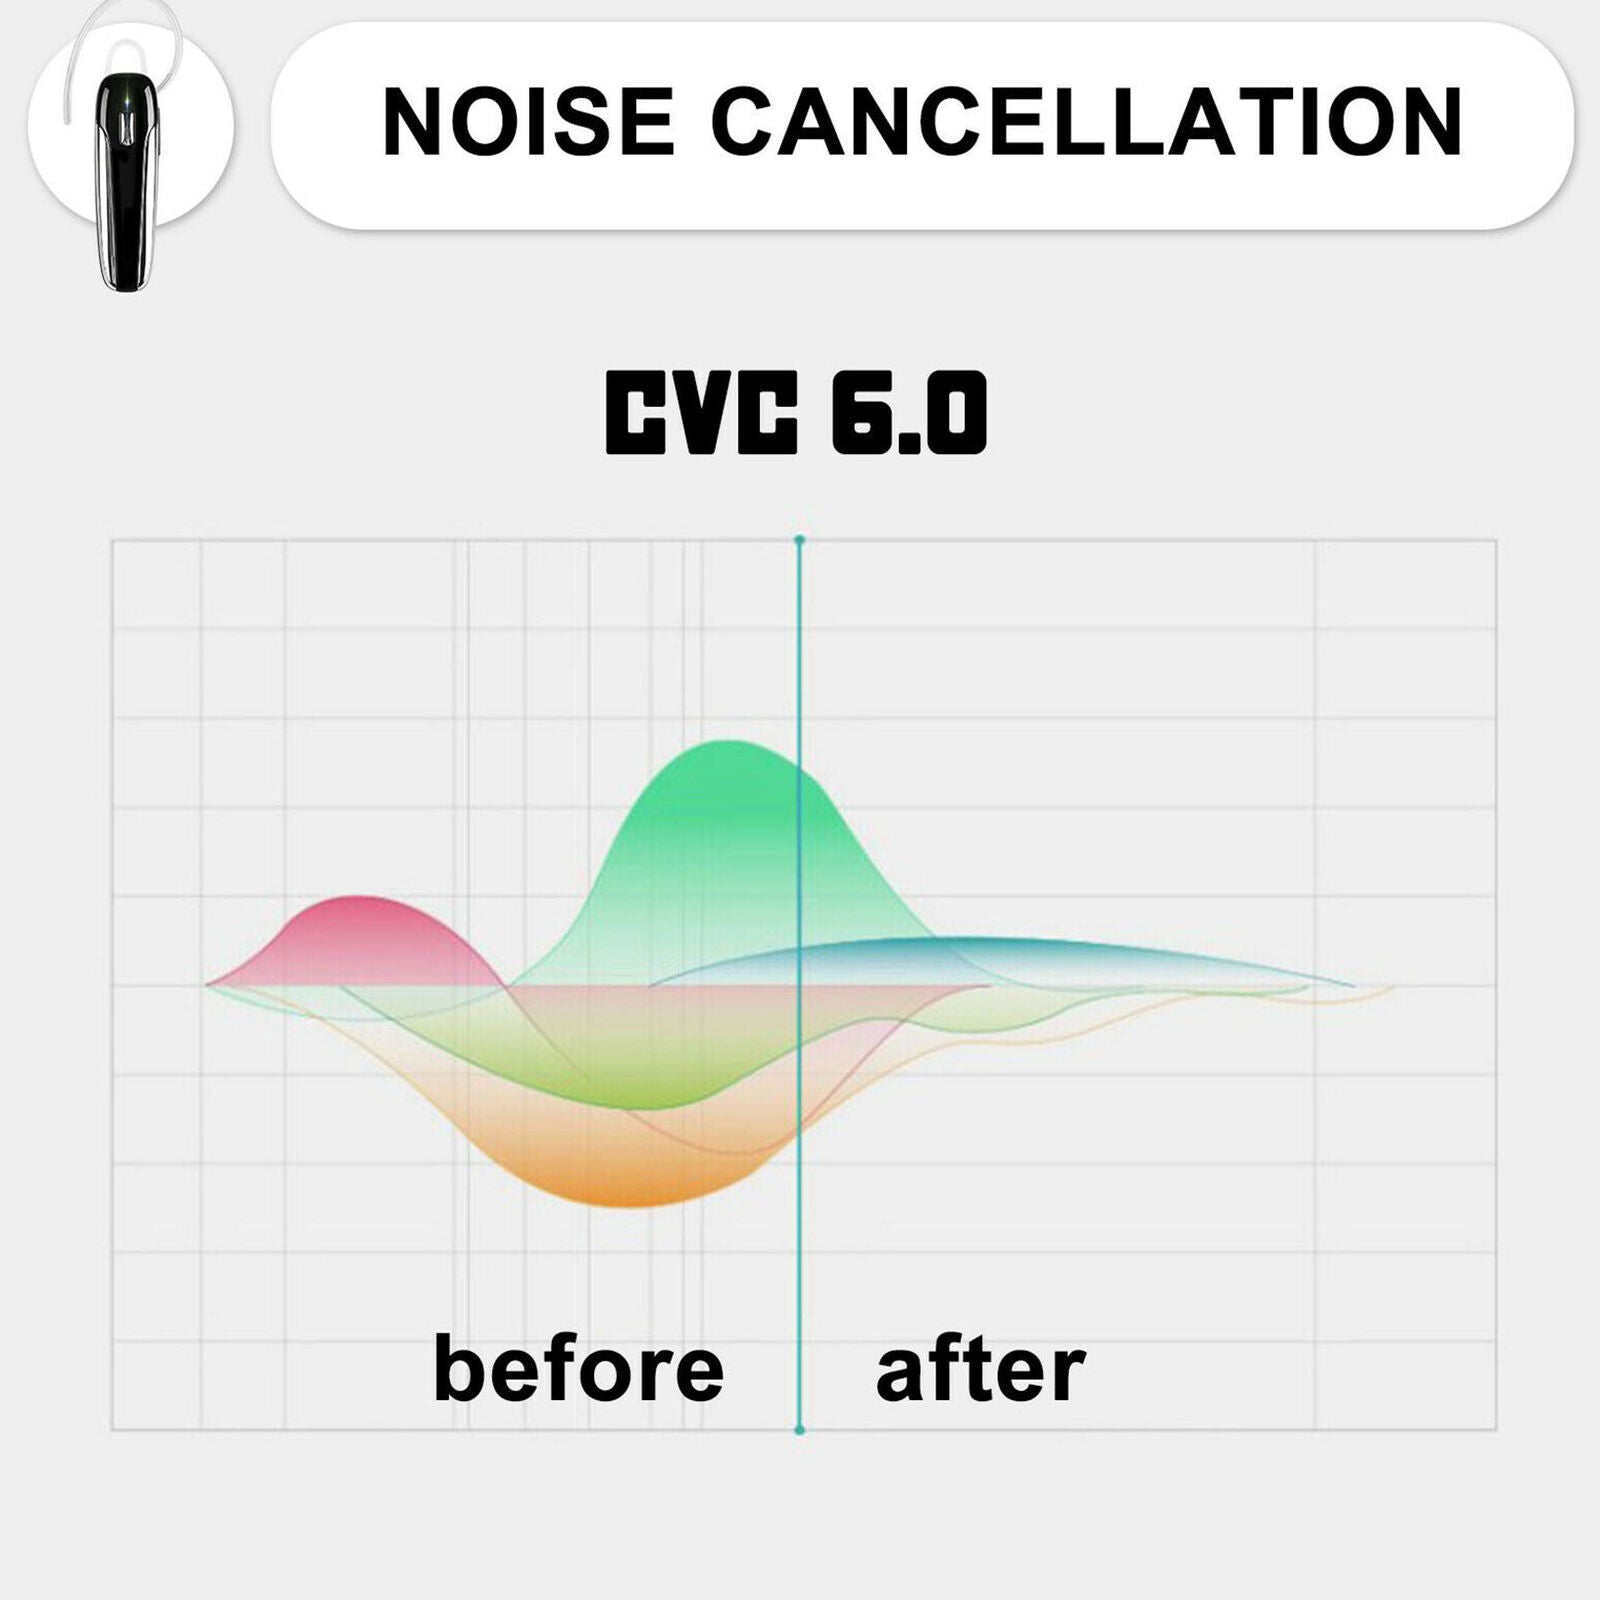 Bluetooth 5.0 Wireless Earpiece Noise Cancelling Driving Trucker Headset Earbuds